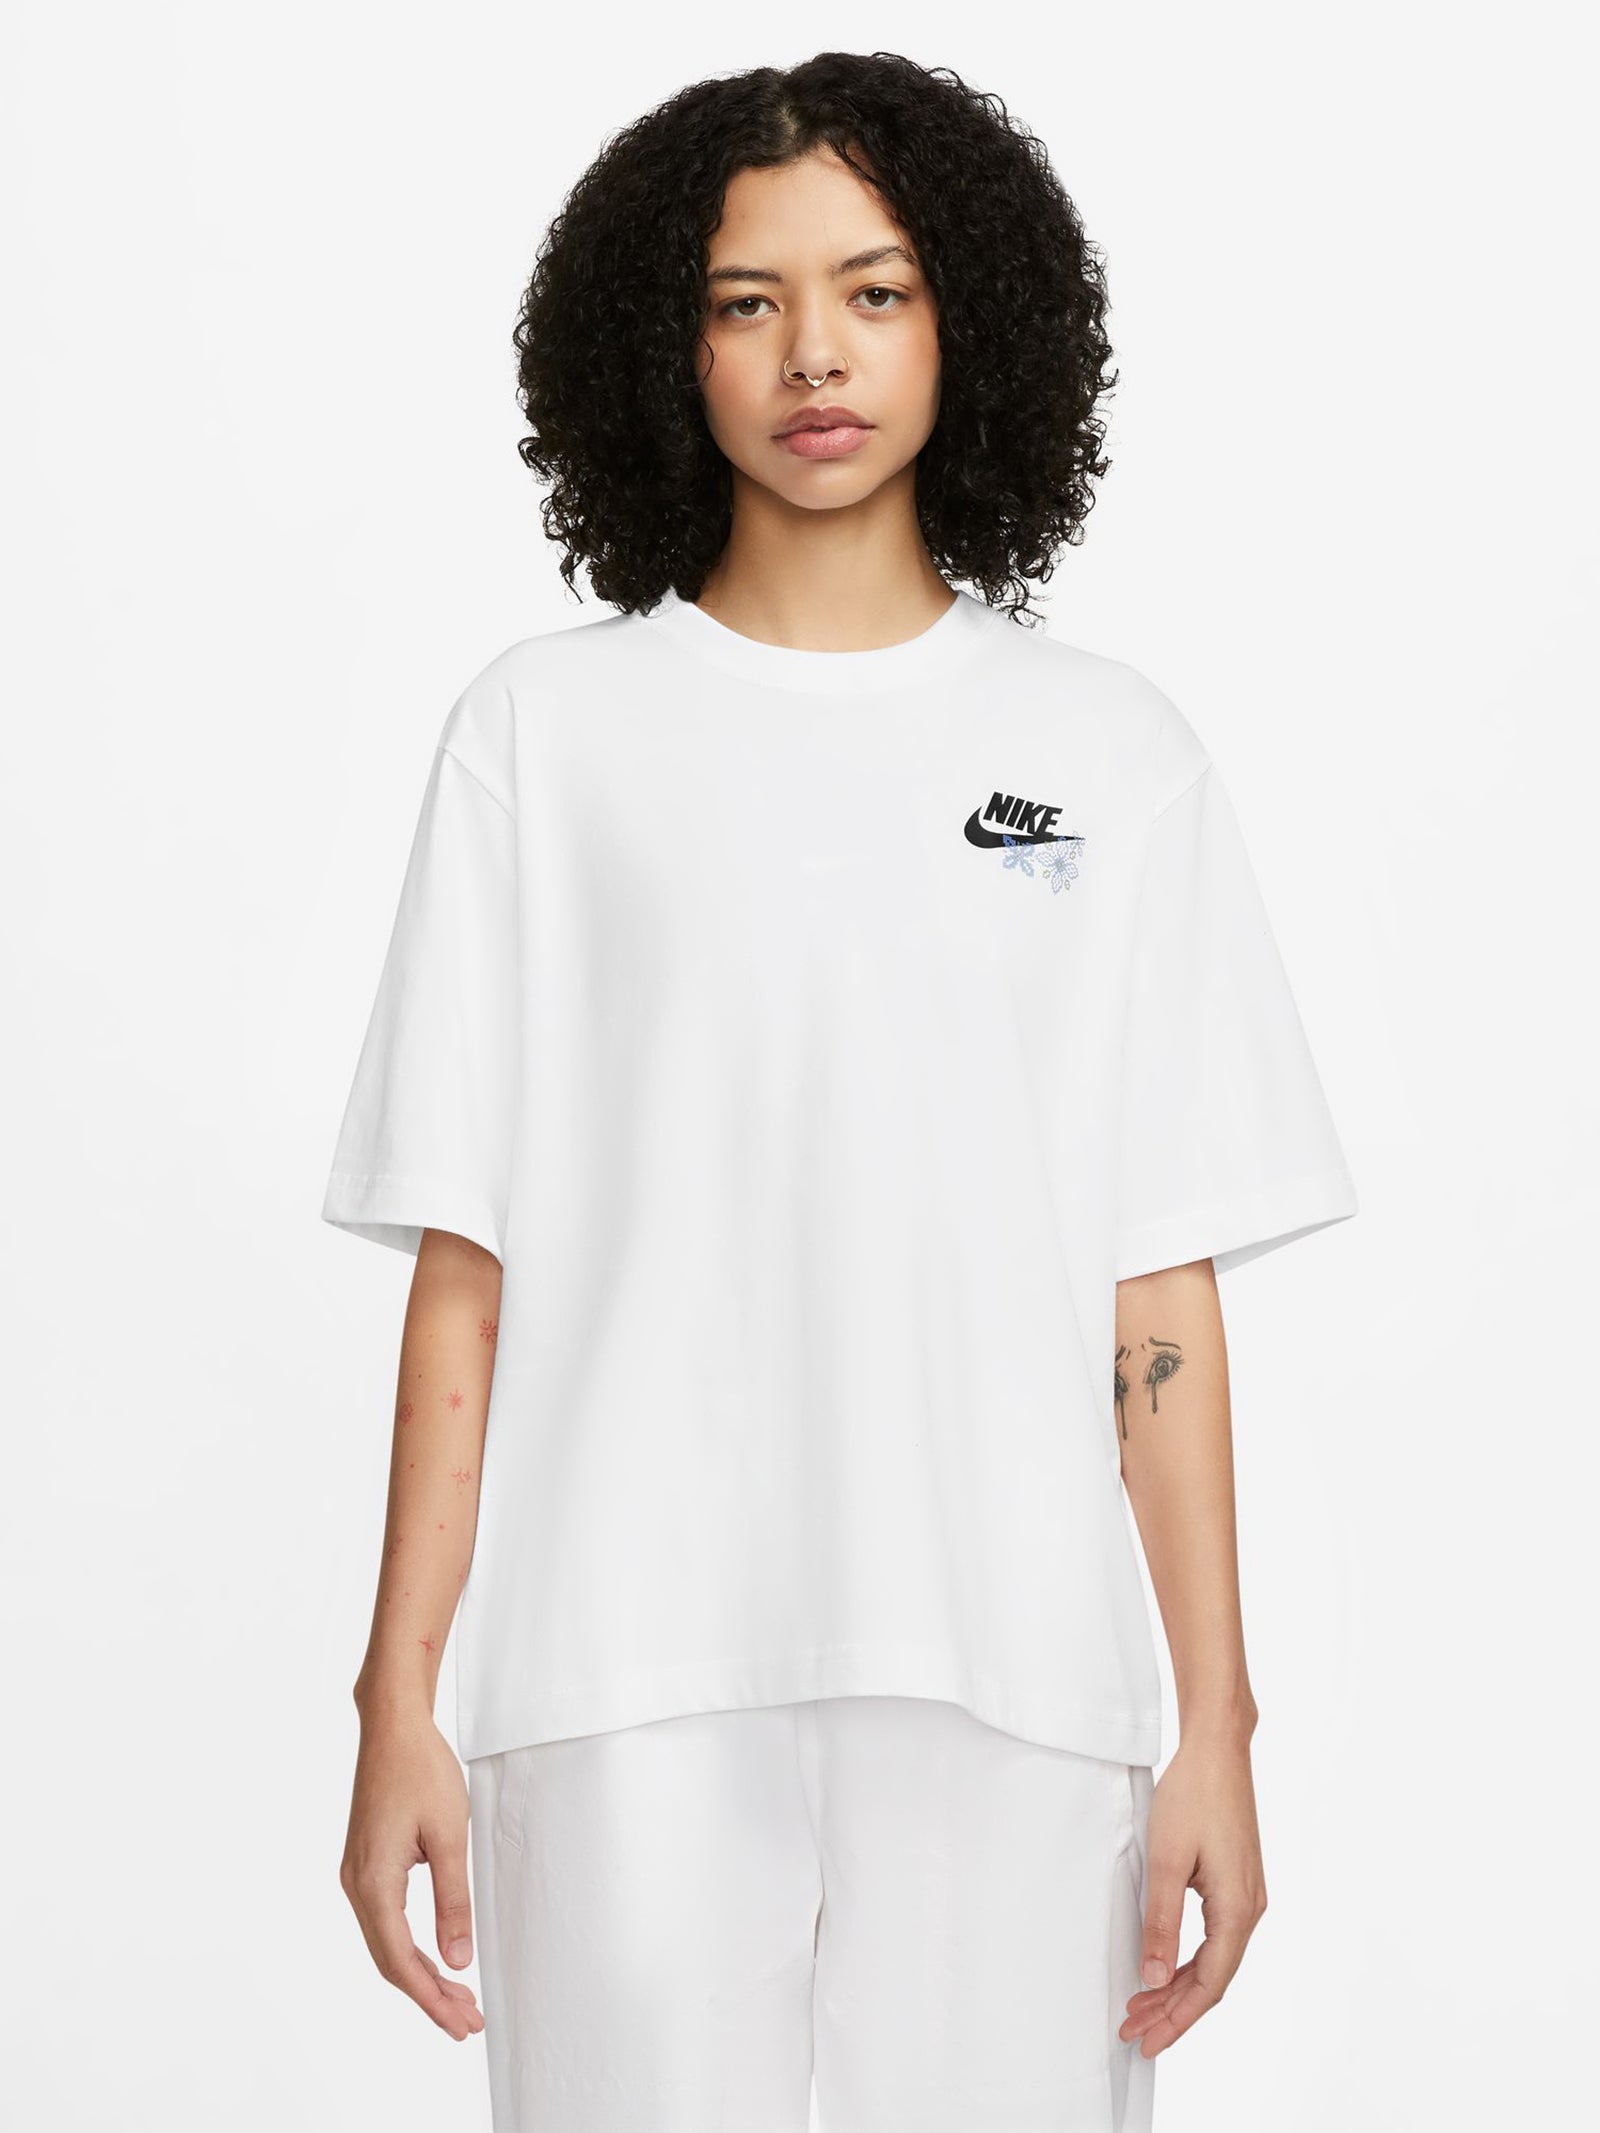 Short Glue Store - in Sportswear T-Shirt White Sleeve